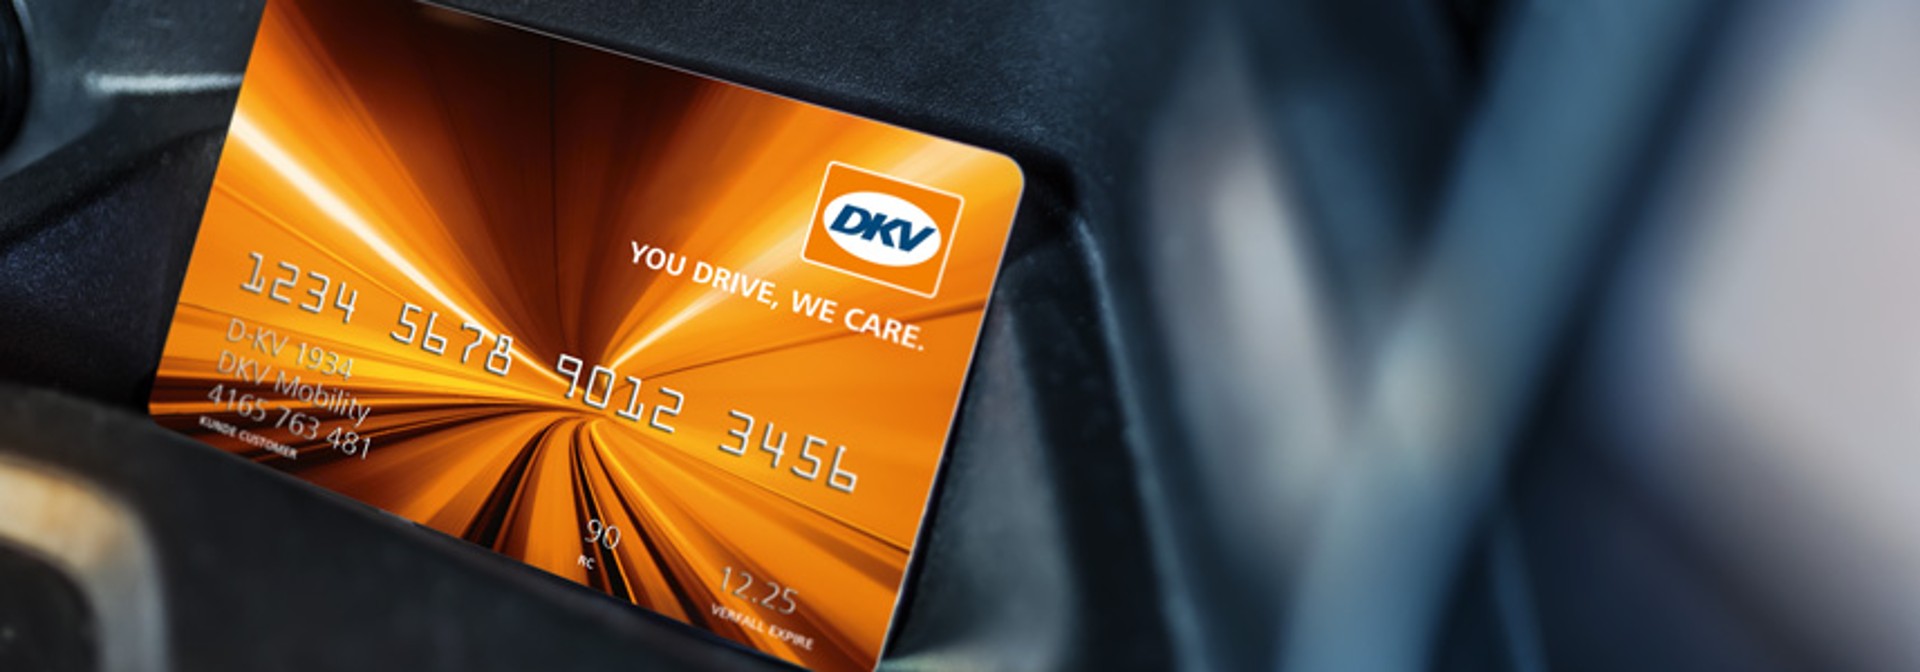 Fokus auf DKV Card im Auto.